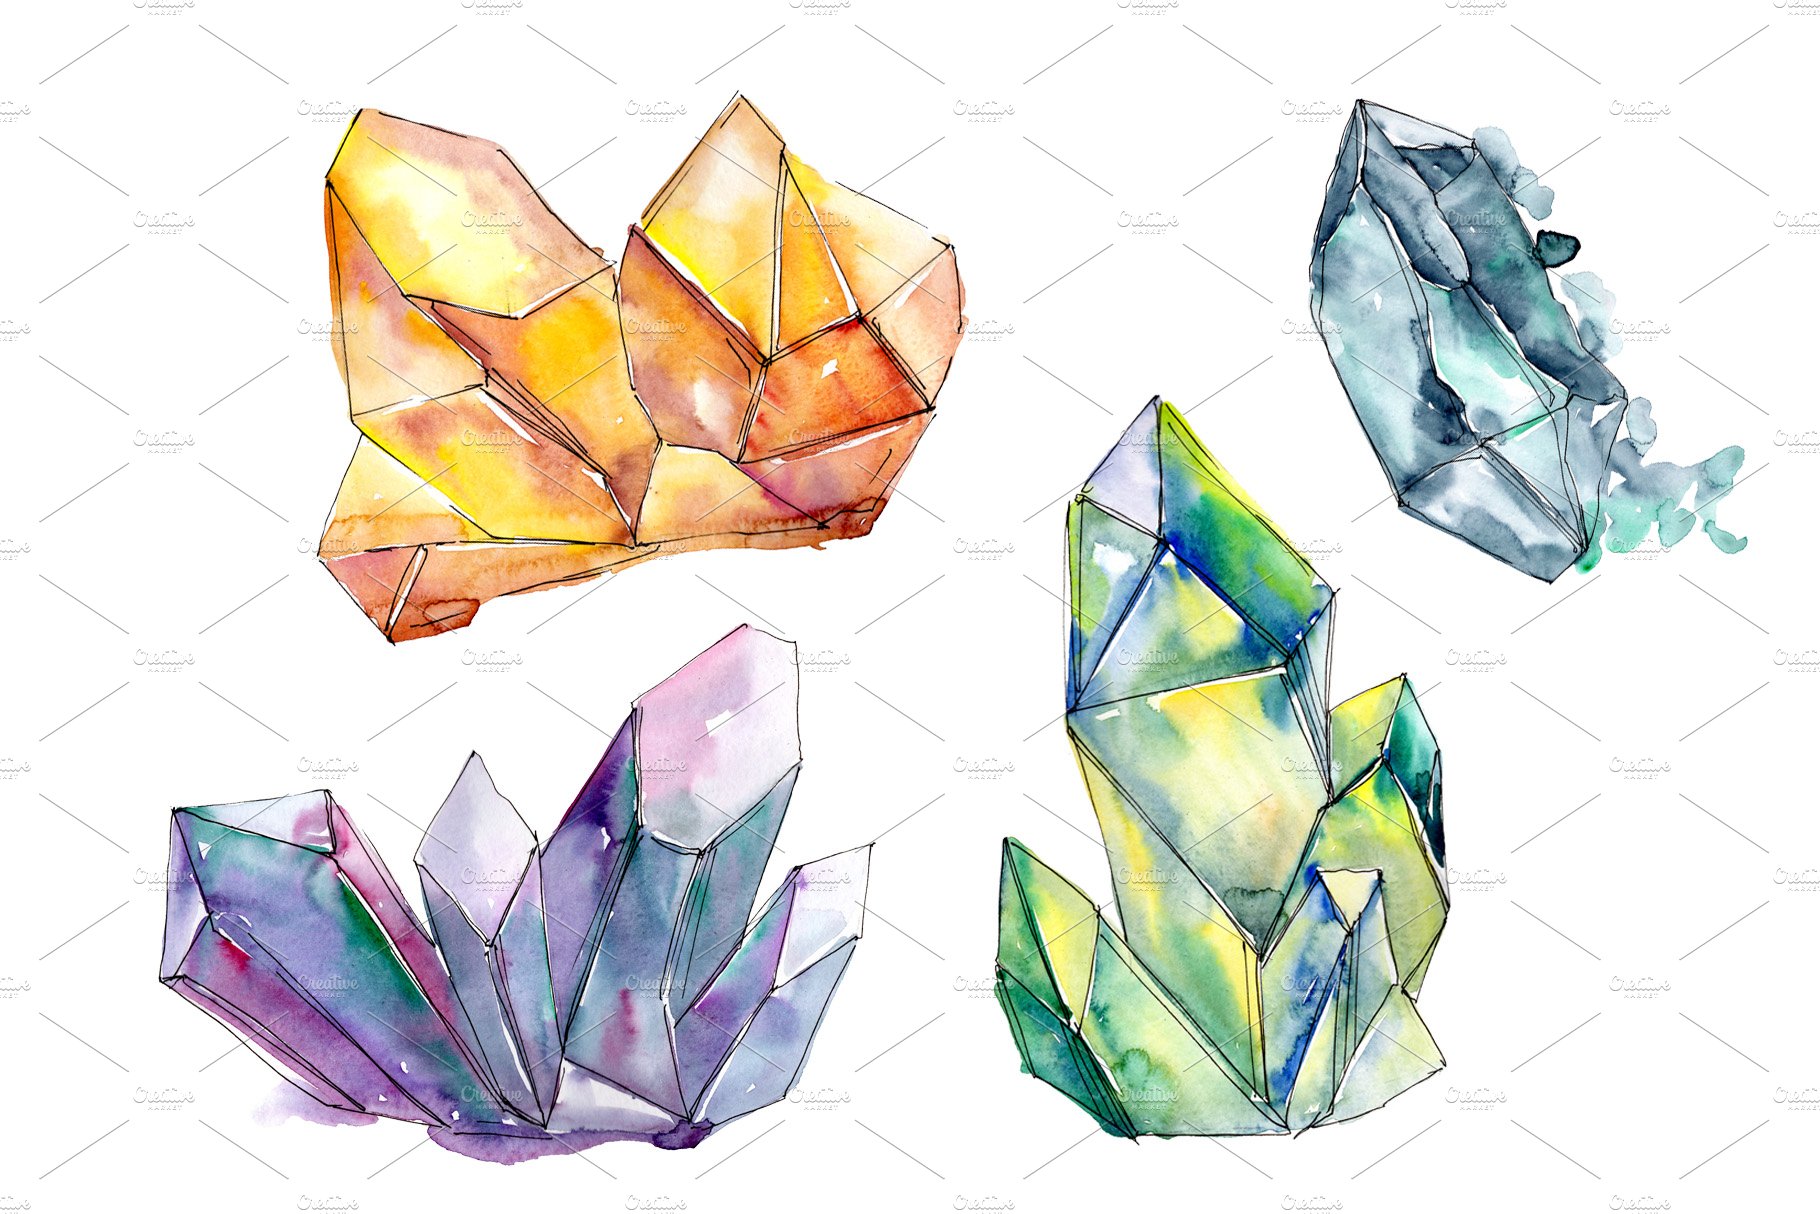 Aquarelle colorful geometric crystal cover image.